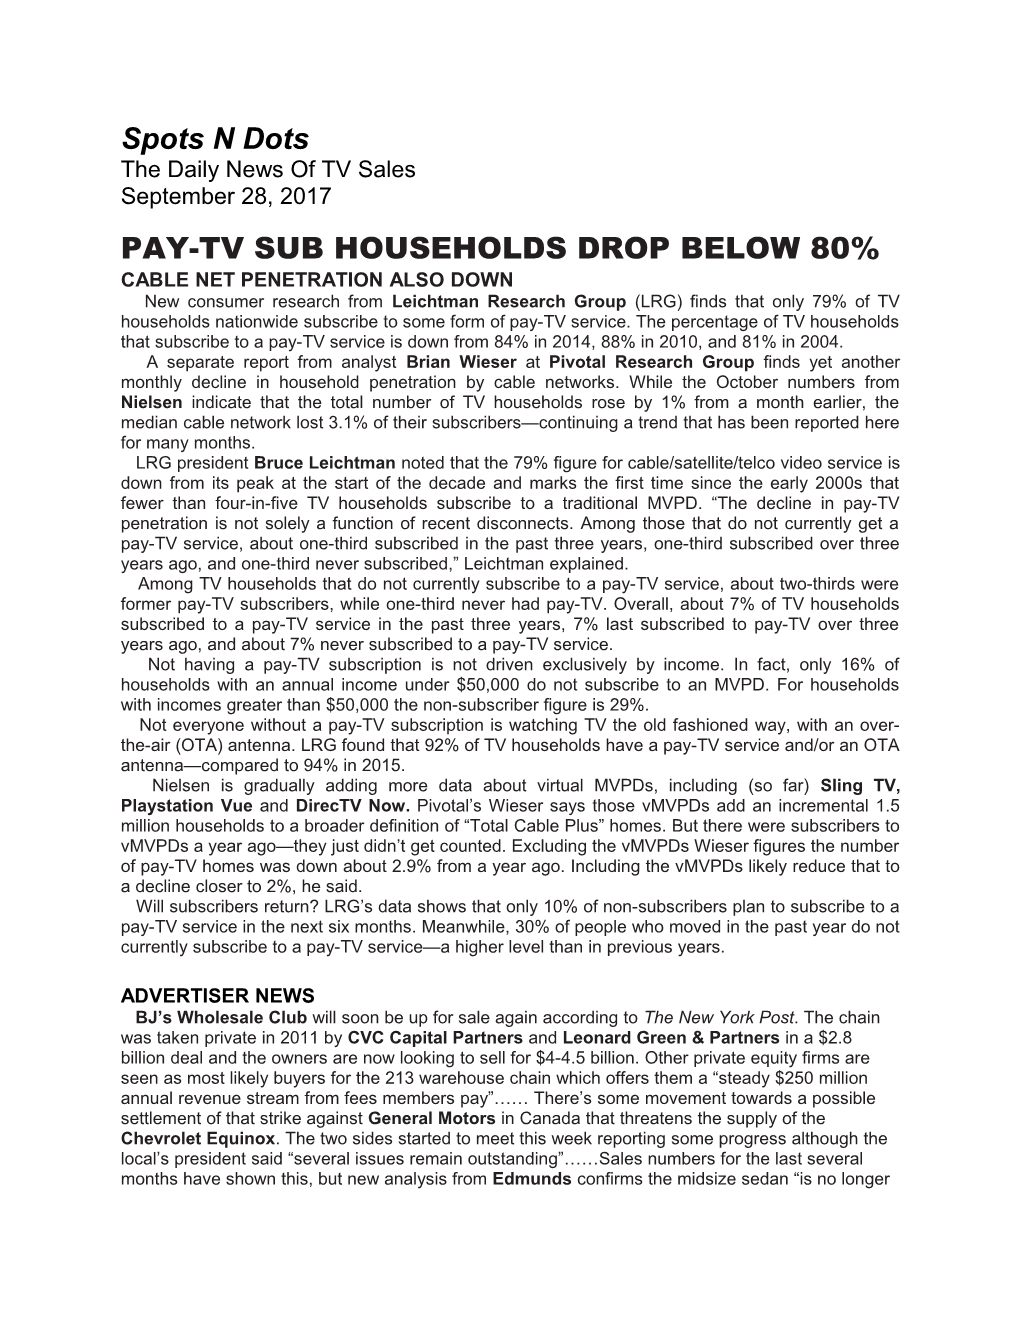 Pay-Tv Sub Households Drop Below 80%